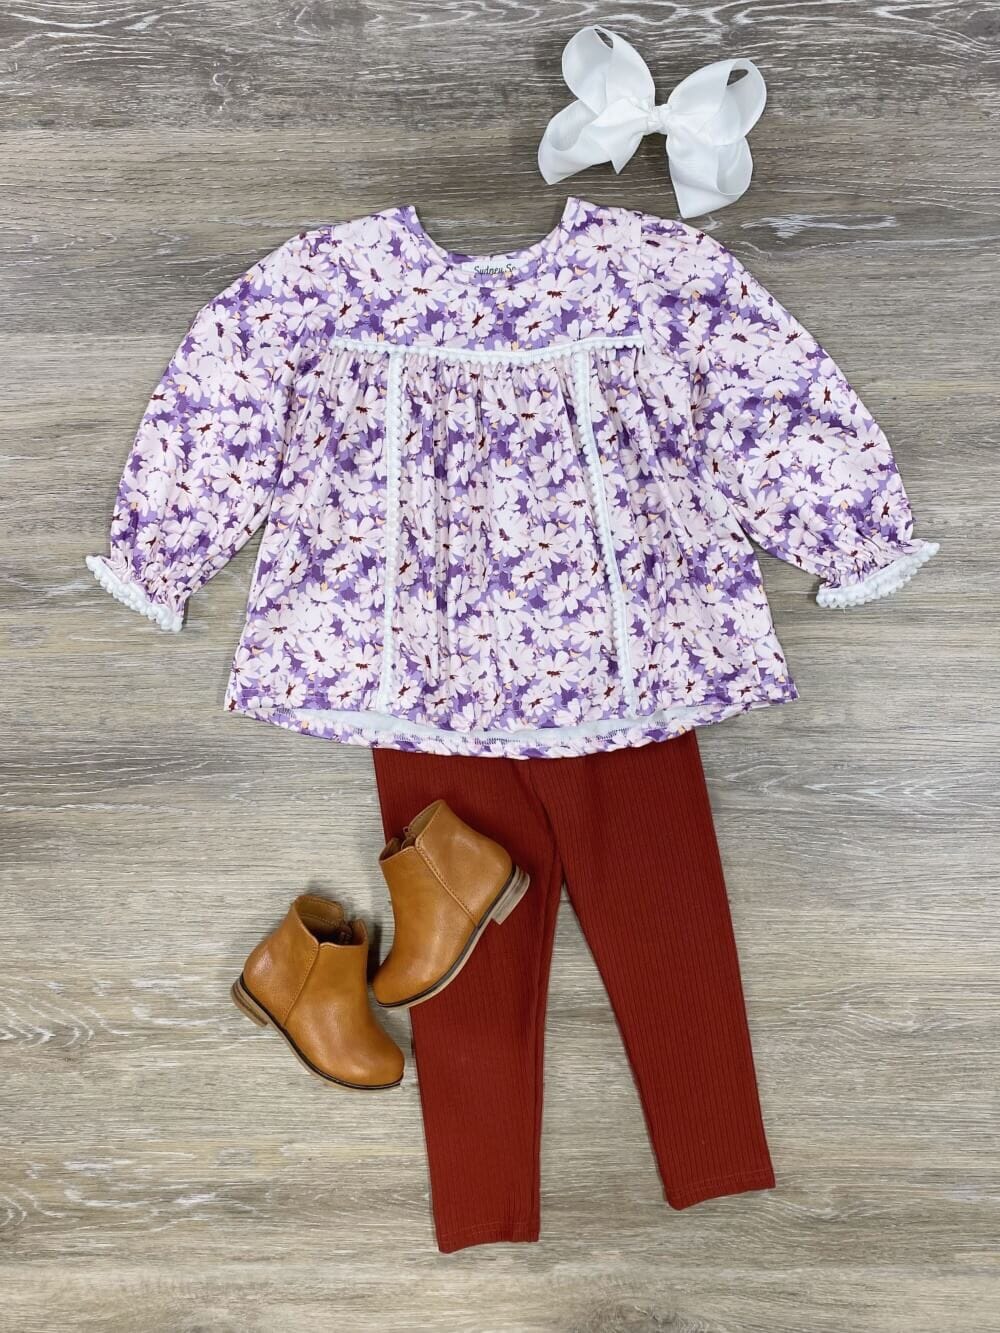 Purple Floral Peplum Top & Leggings Girls Outfit - Sydney So Sweet